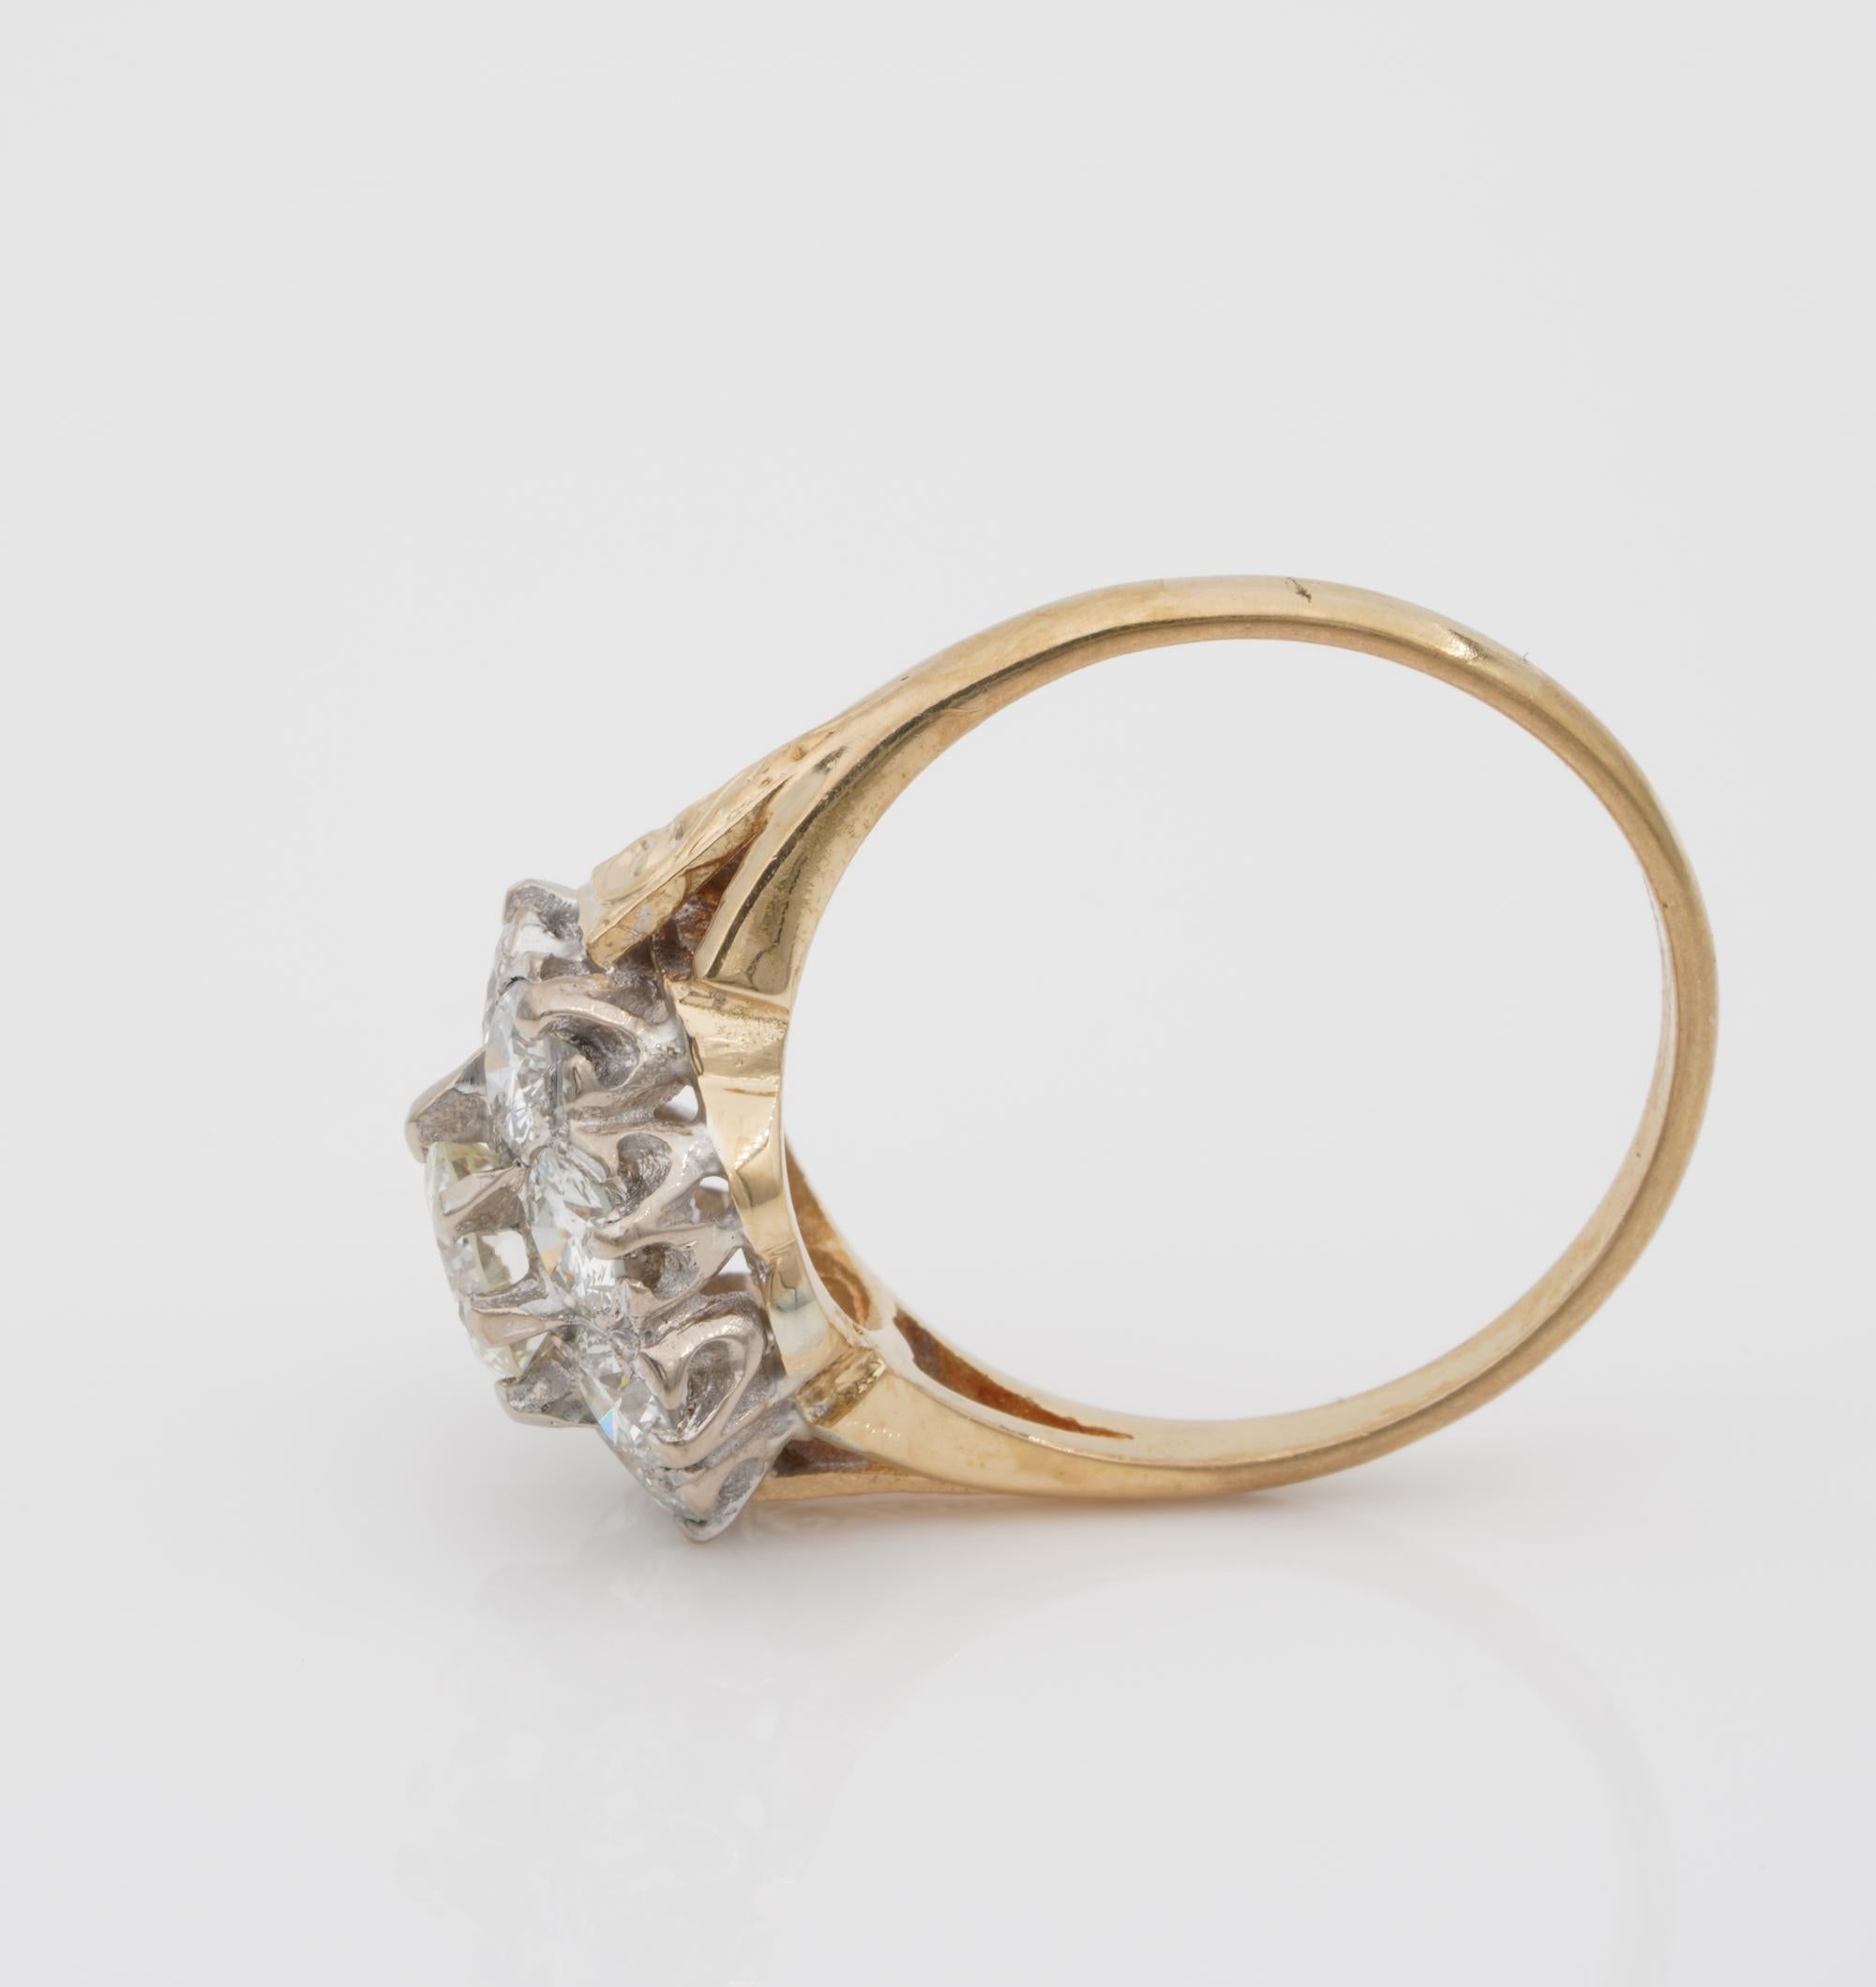 1940 Sensational 2.50 Carat Diamond G VVS/VS Daisy Cluster Ring 18 Karat In Good Condition For Sale In Napoli, IT